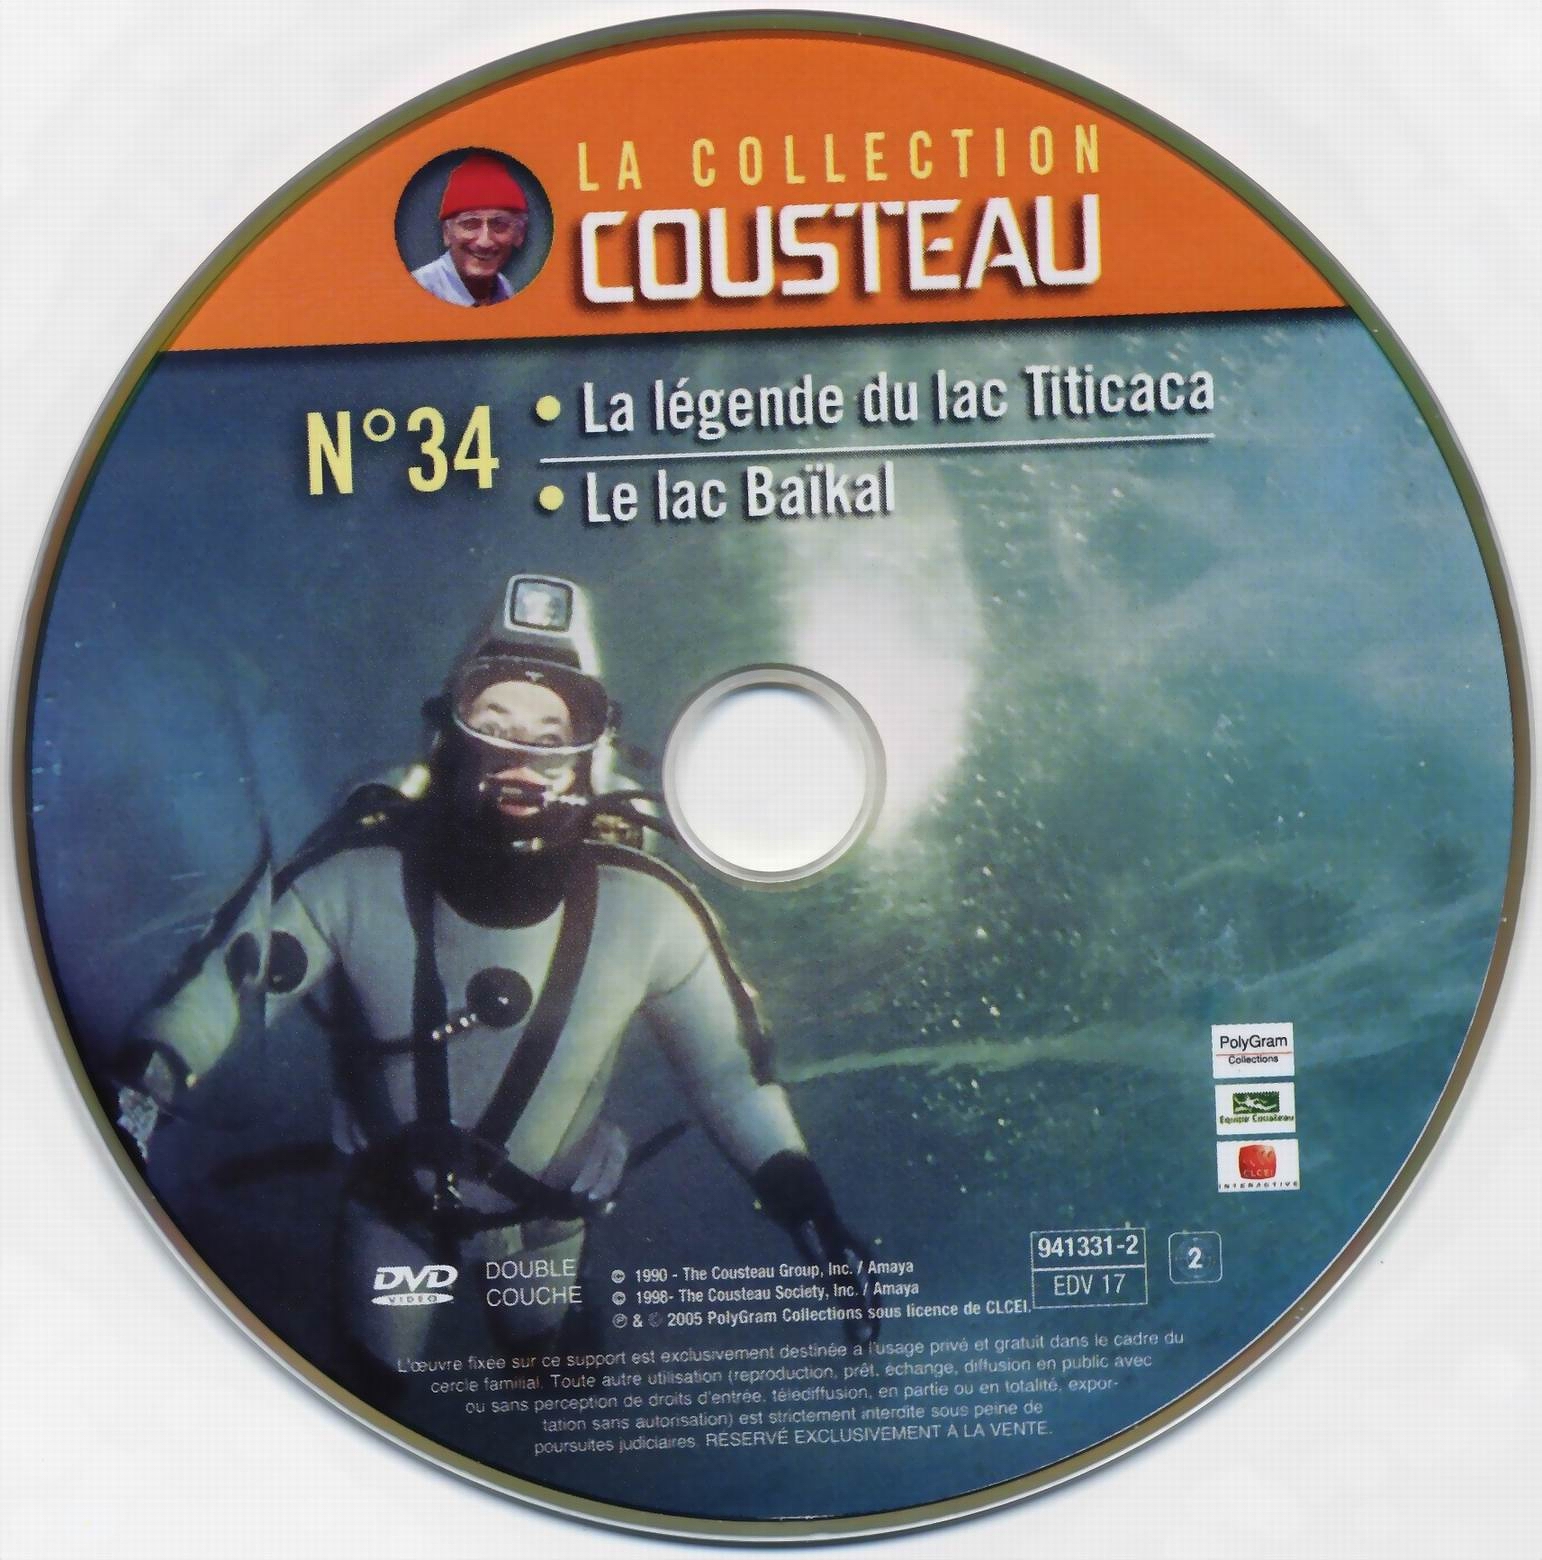 Cousteau Collection vol 34